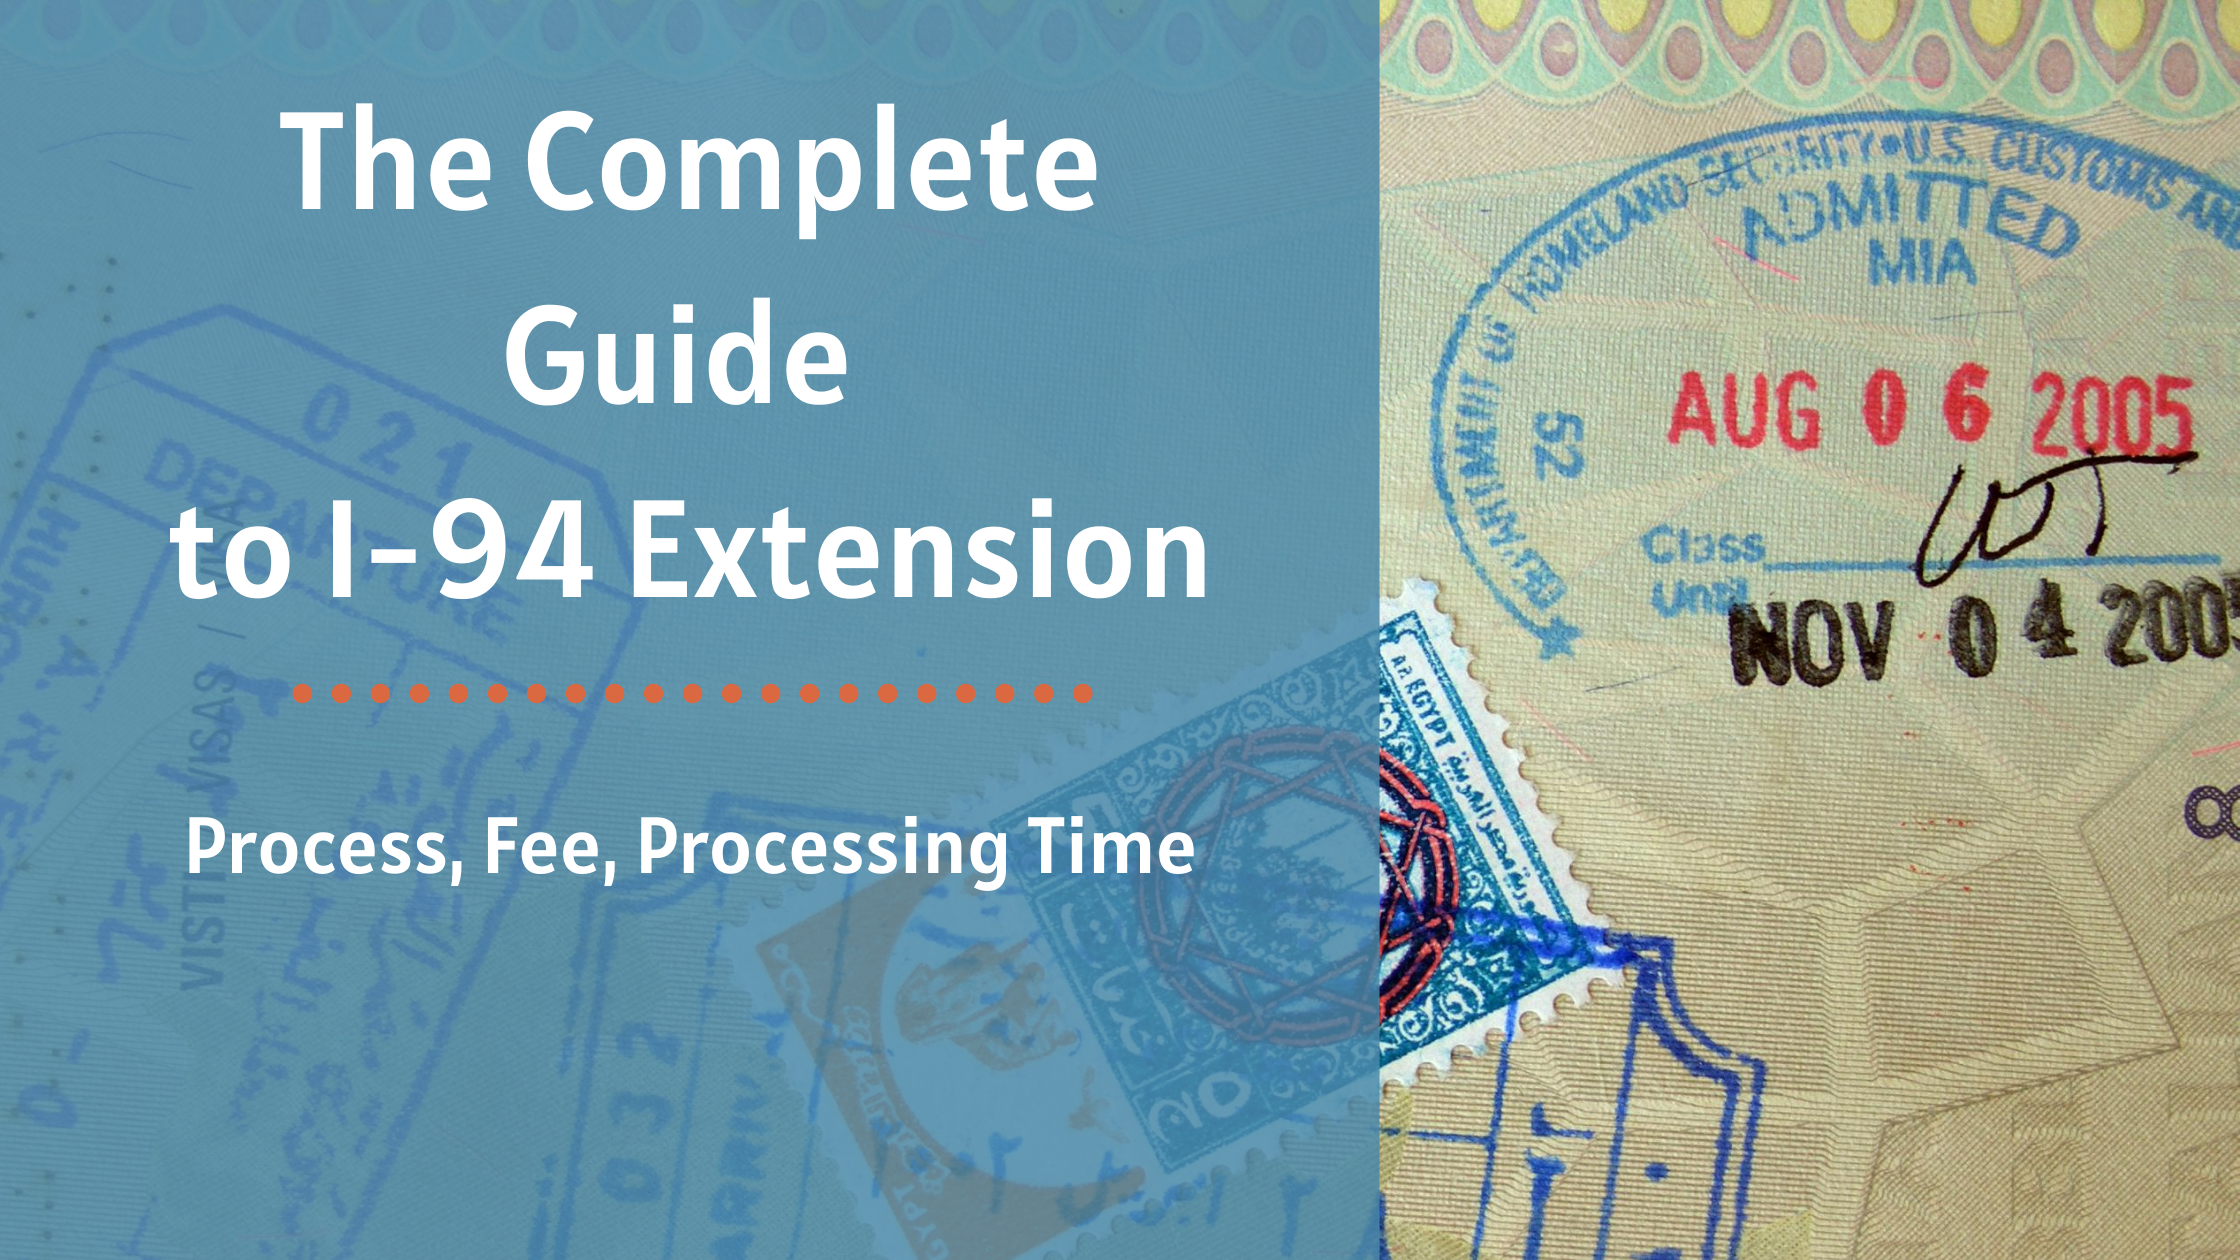 i94 extension after passport renewal